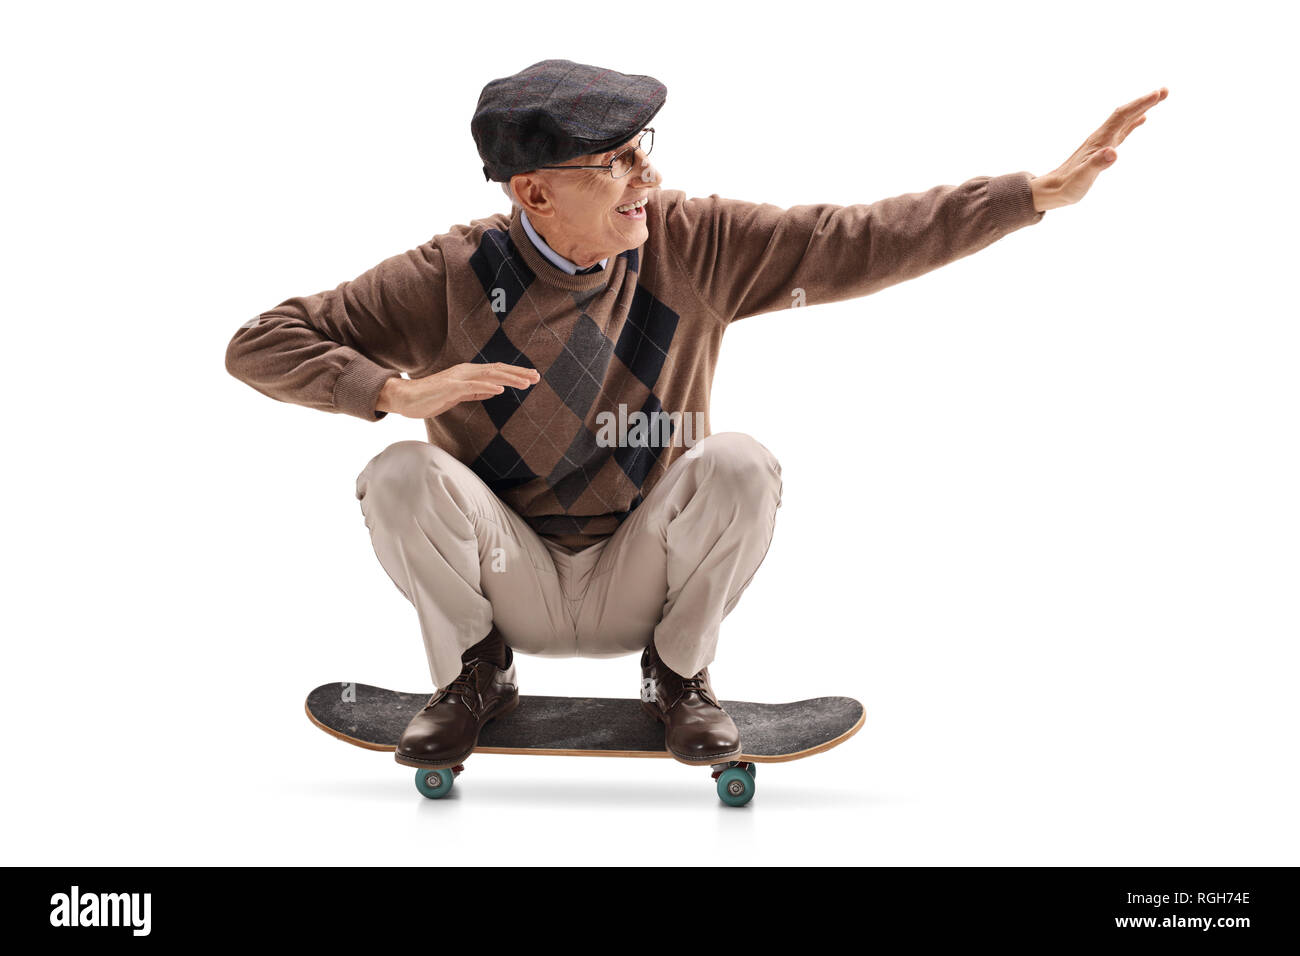 Energetic senior man riding a skateboard isolated on white background Stock Photo